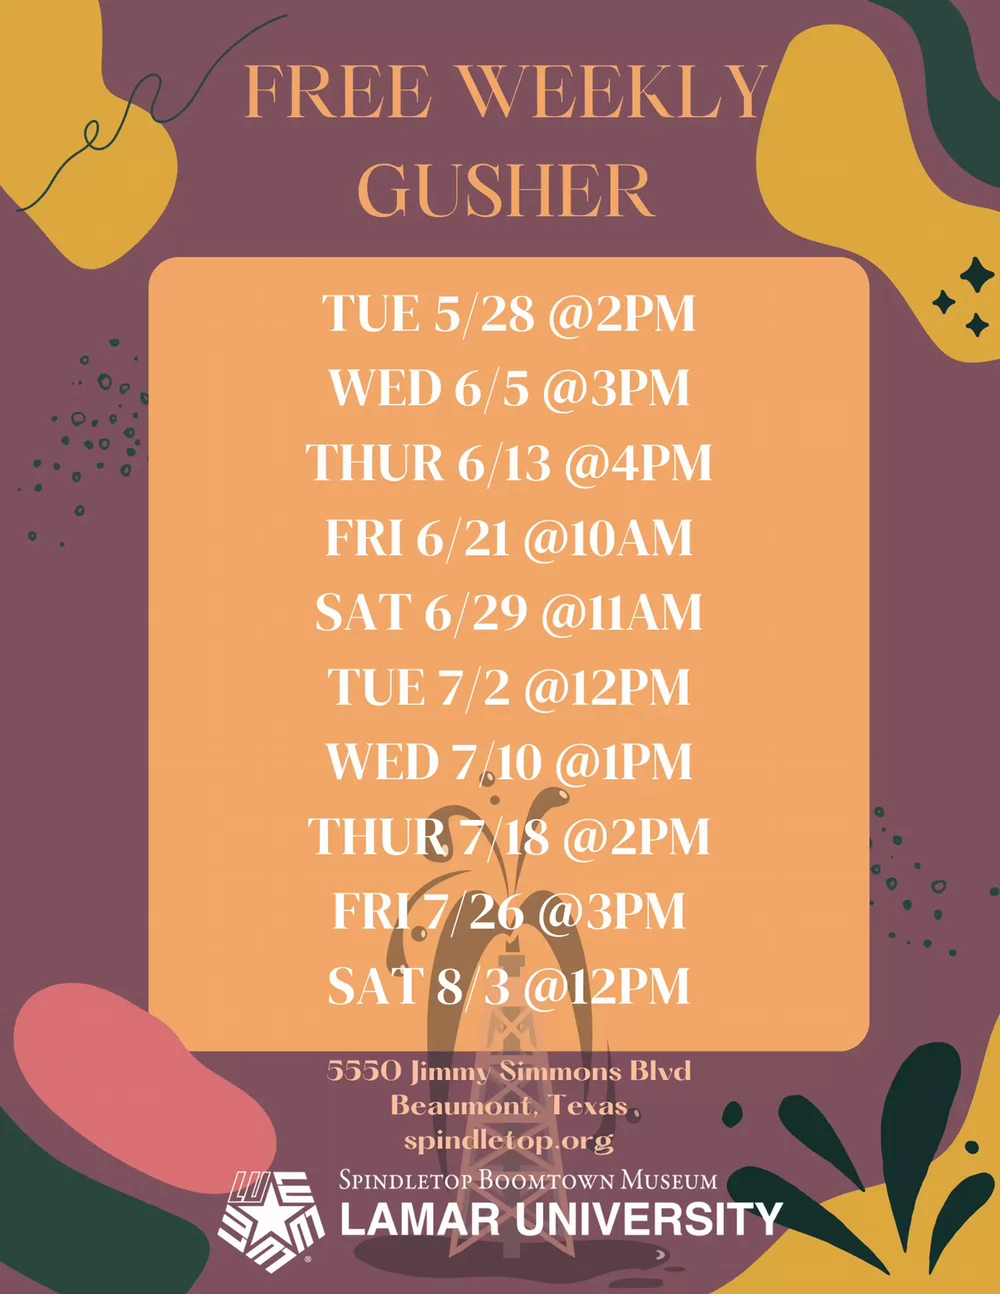 Free Weekly Gusher